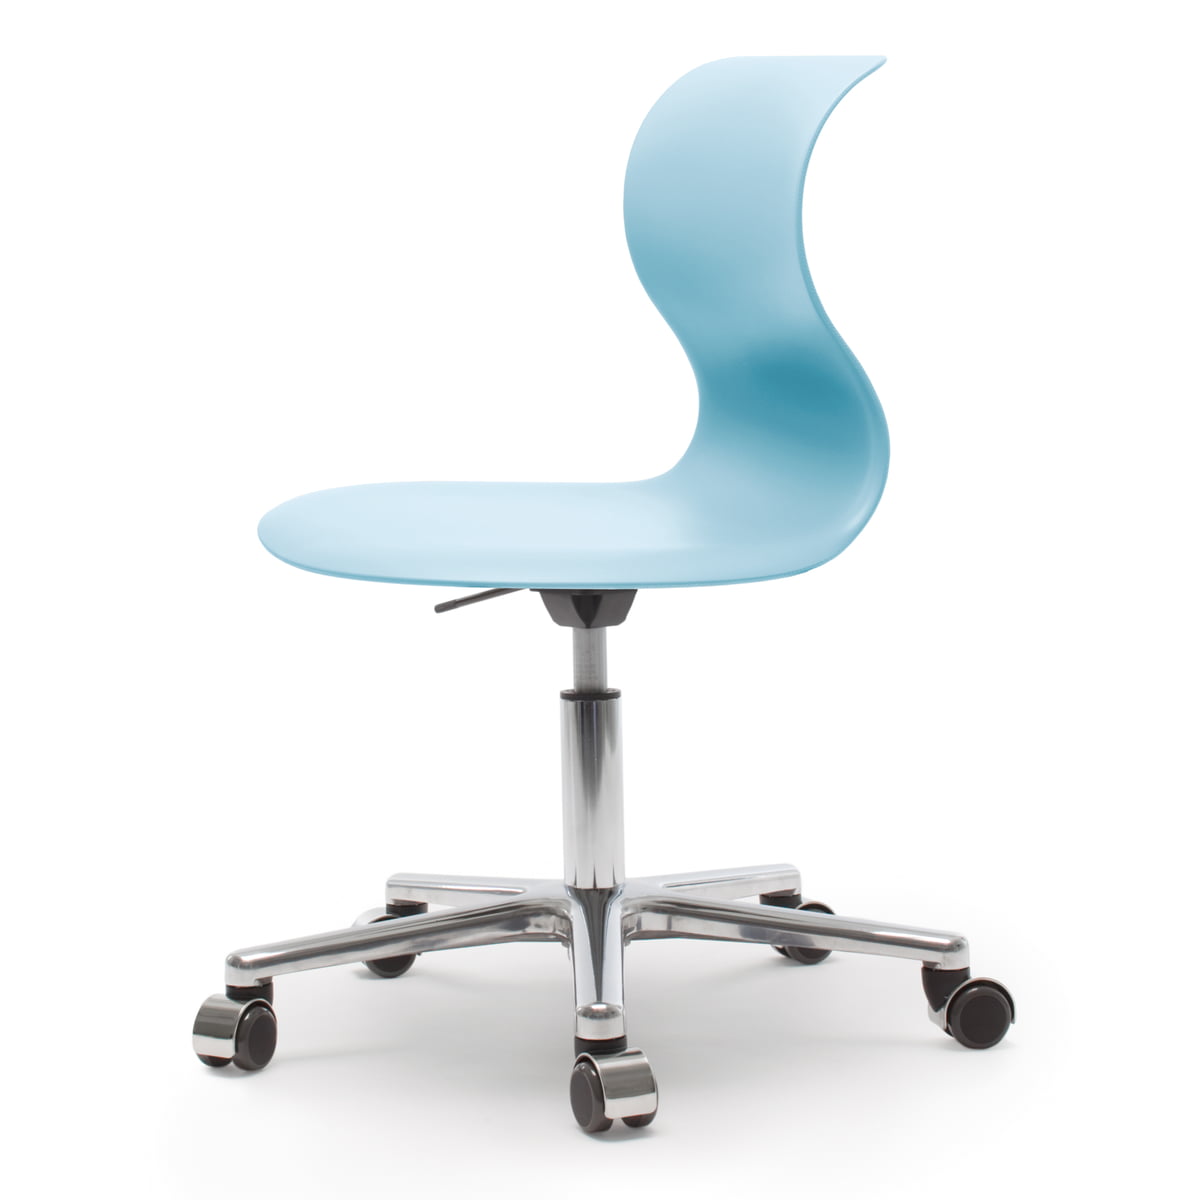 Flötotto - Pro 6 chaise pivotante, aluminium poli / aqua bleu, roulettes souples (avec capot poli)